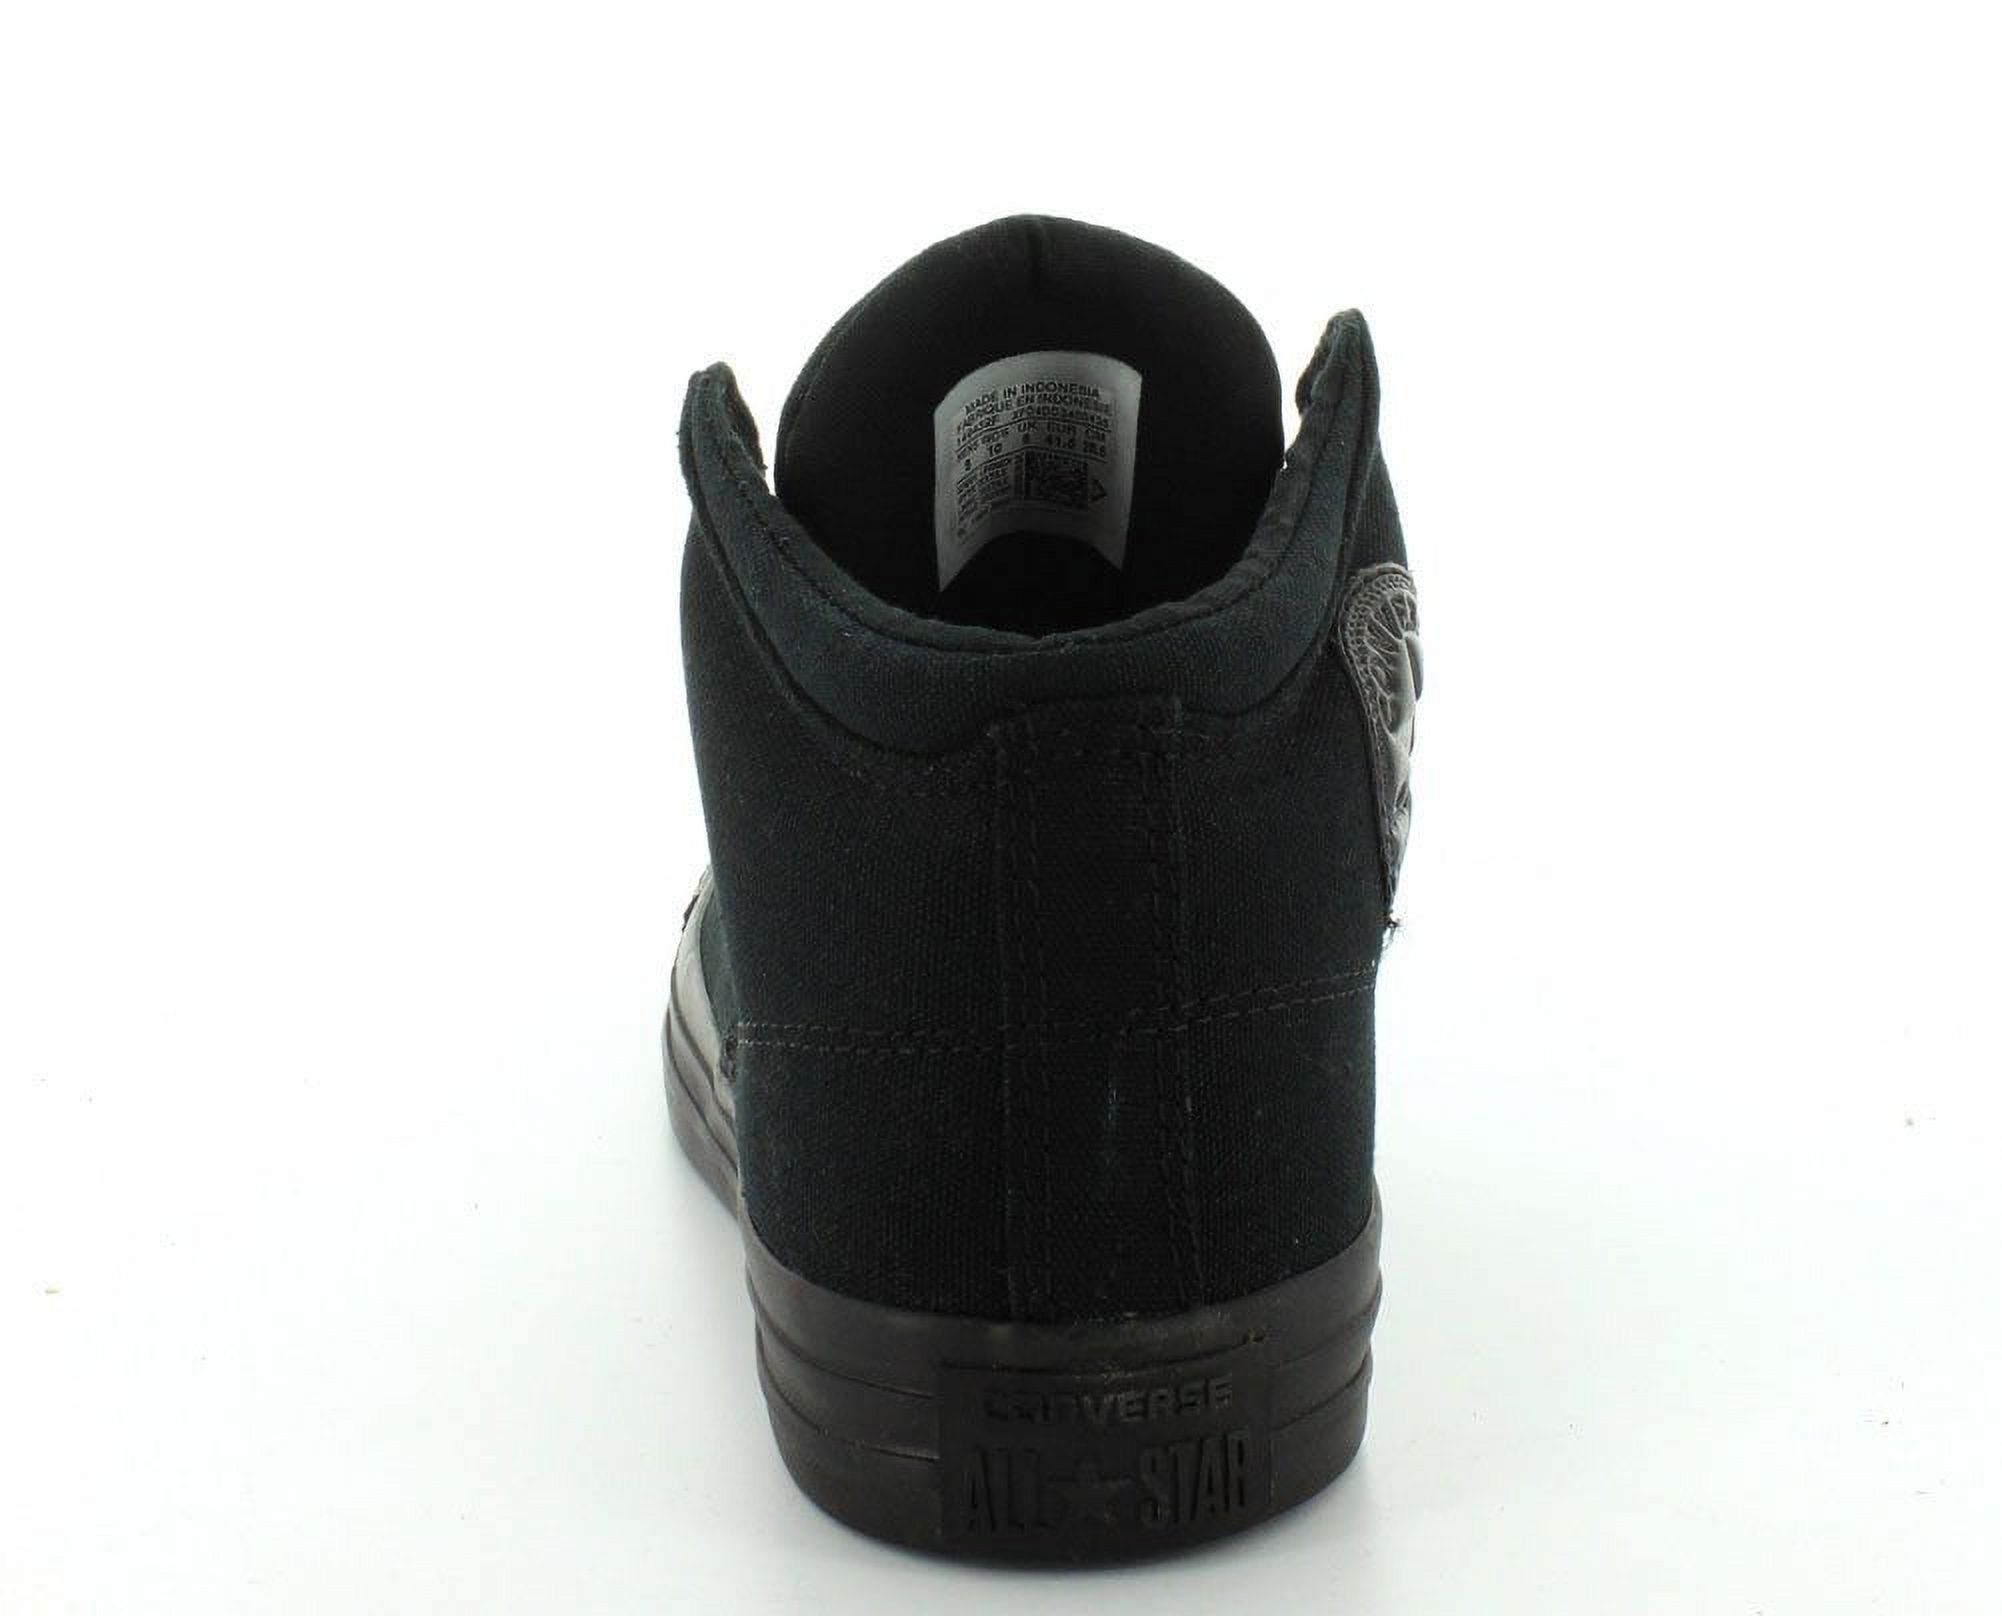 Converse Men's Street Canvas High Top Sneaker, Black/Black/Black, 12 M US - image 4 of 5